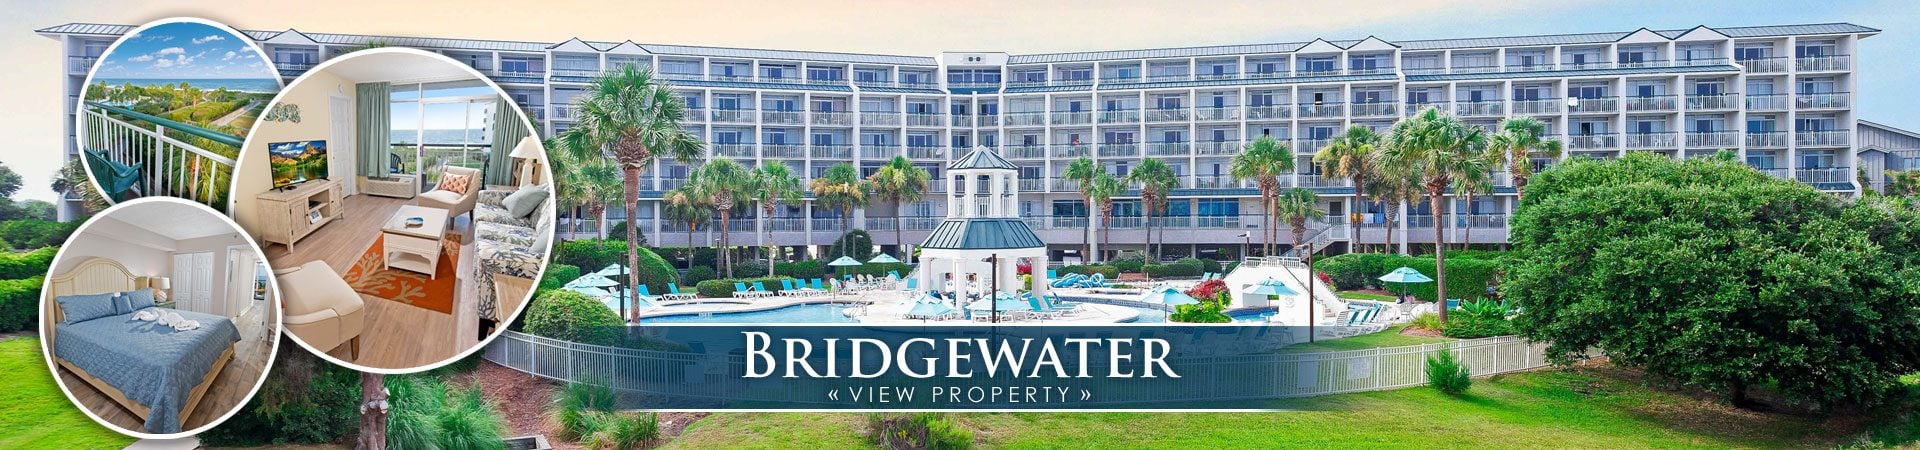 Bridgewater View Property 1920x450 1 1 